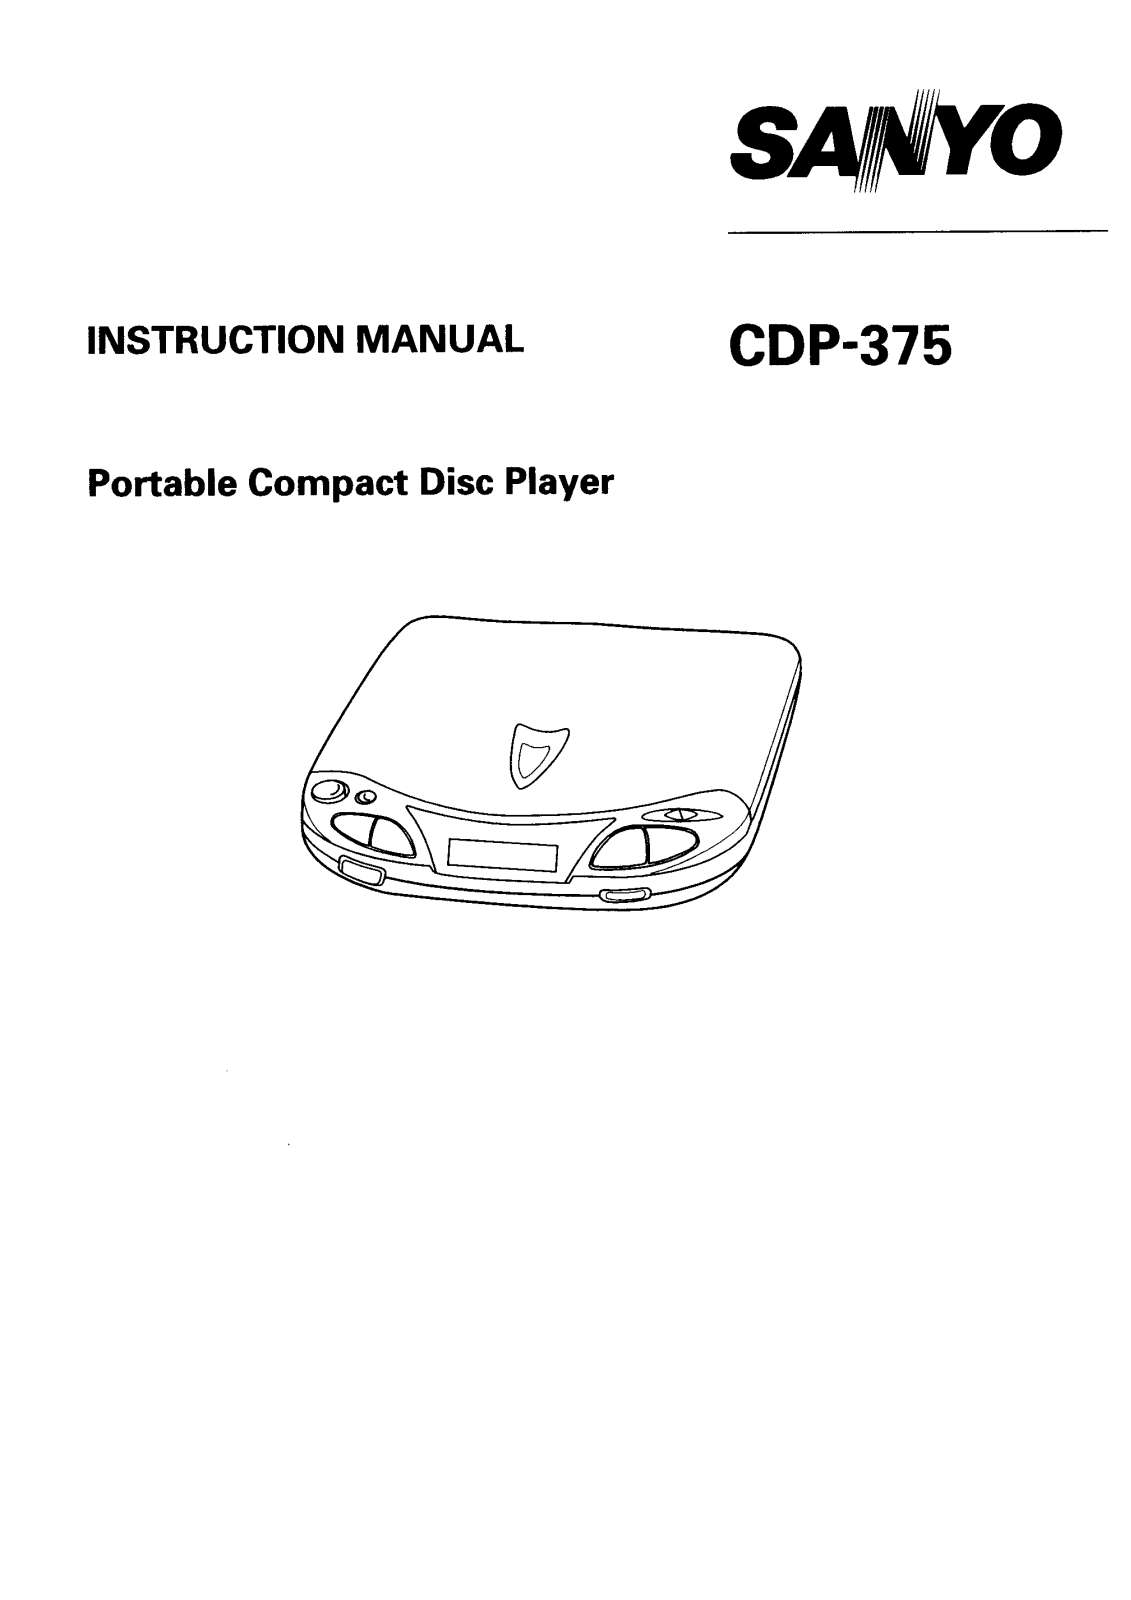 Sanyo CDP-375 Instruction Manual